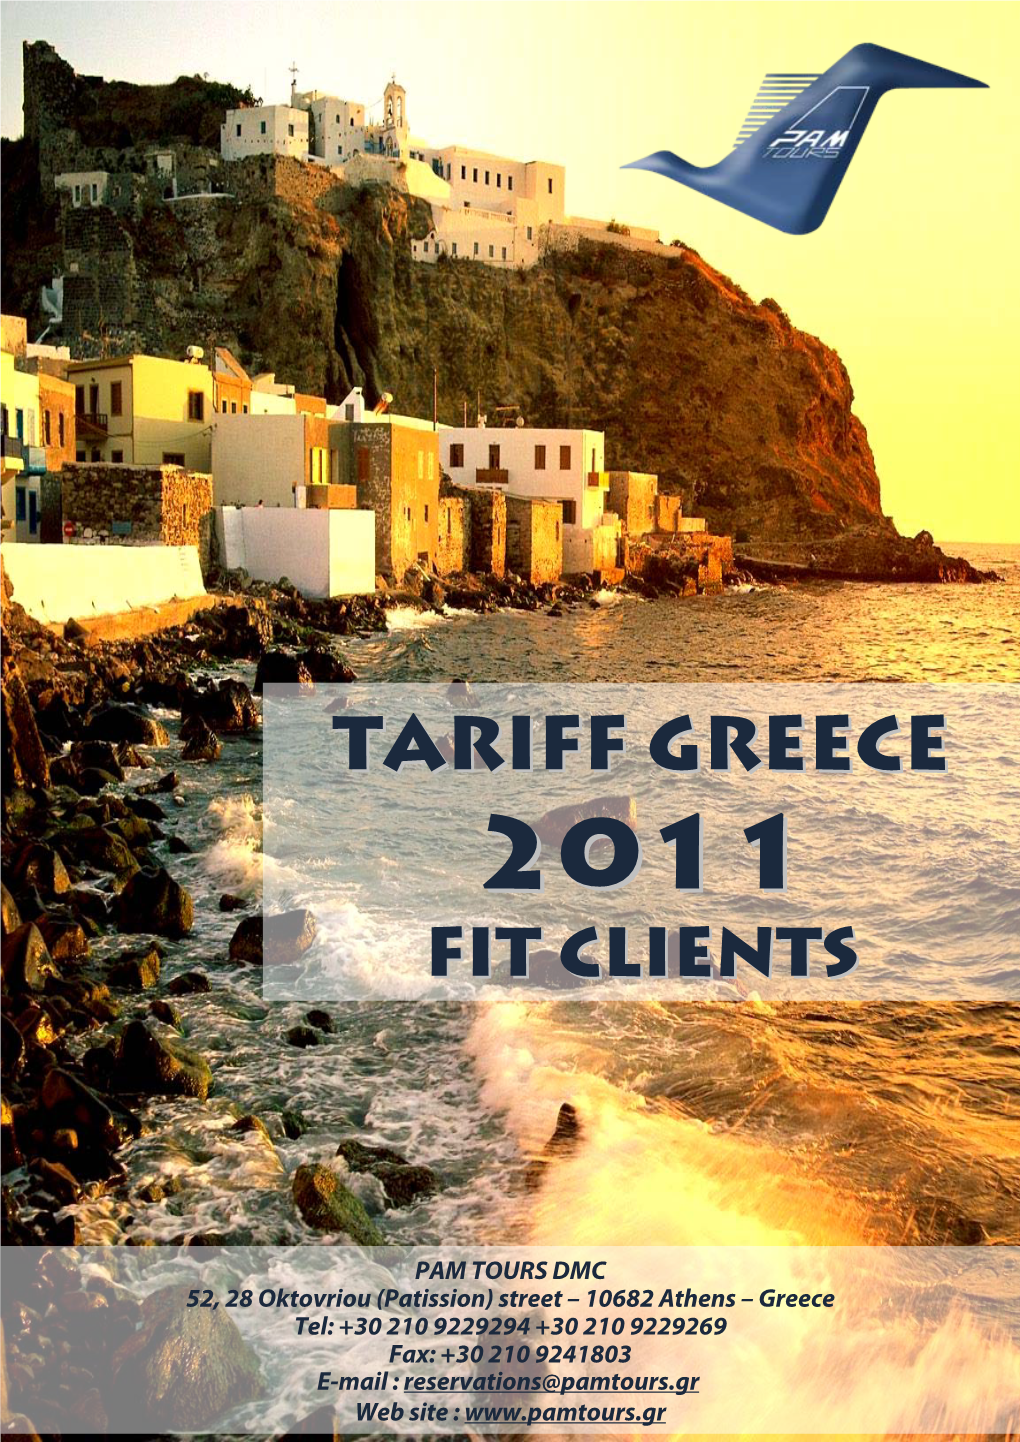 Tariff Greecegreece 20112011 Fitfit Clientsclients